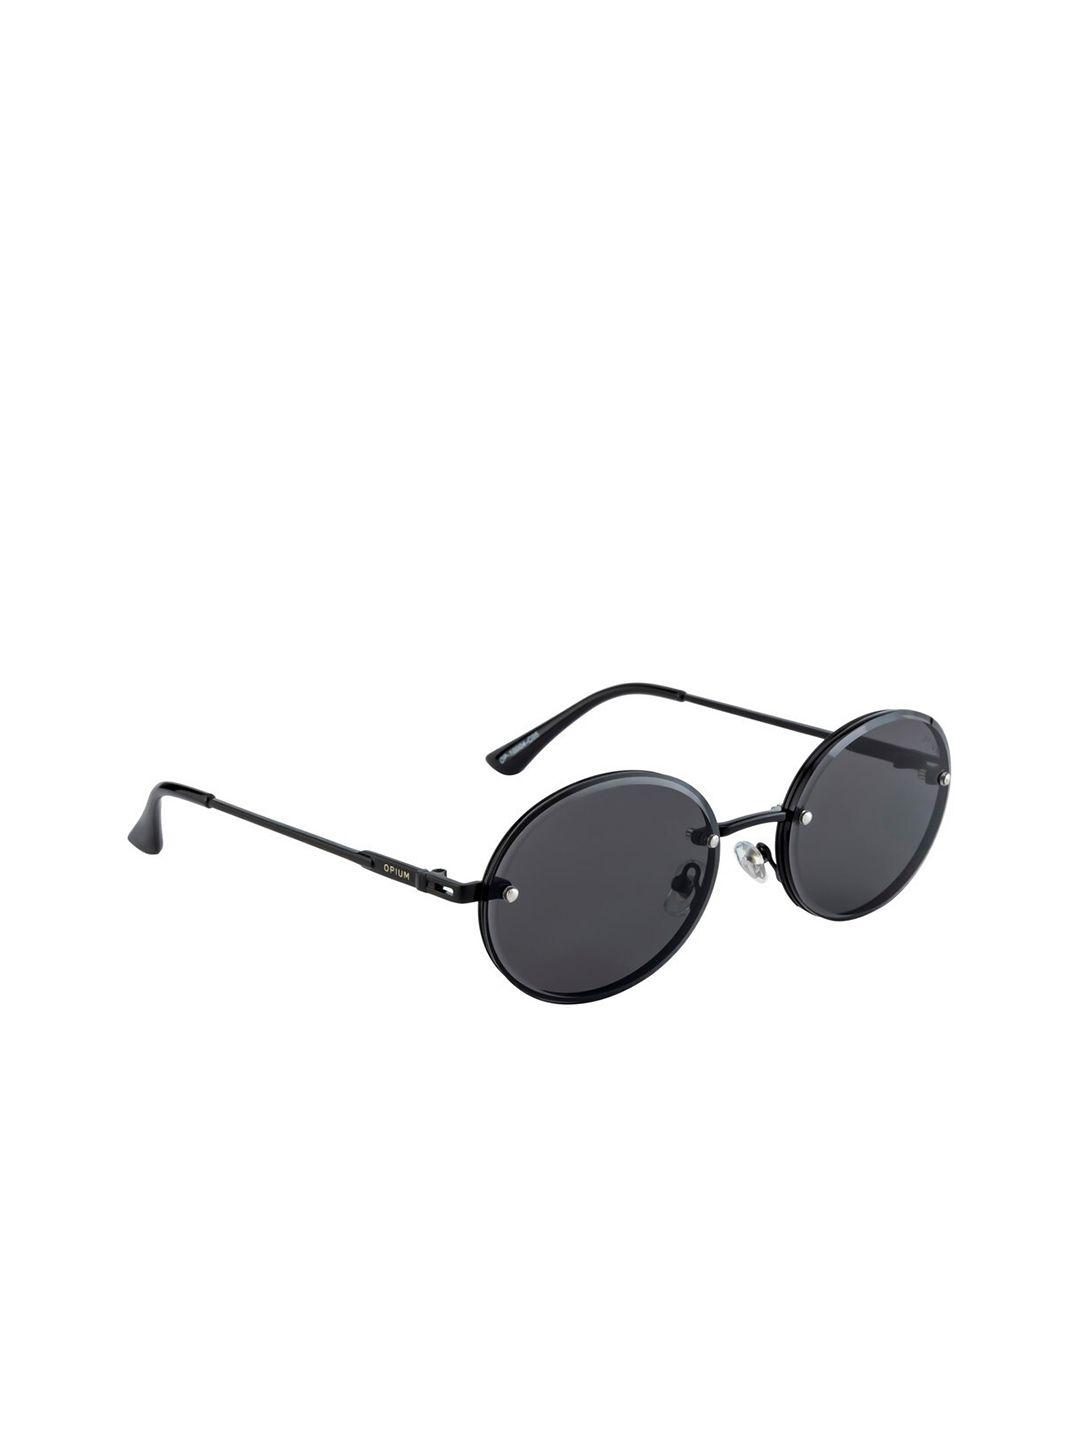 OPIUM Women Black Lens & Black Round Sunglasses With UV Protected Lens-OP-10004-C05-Black